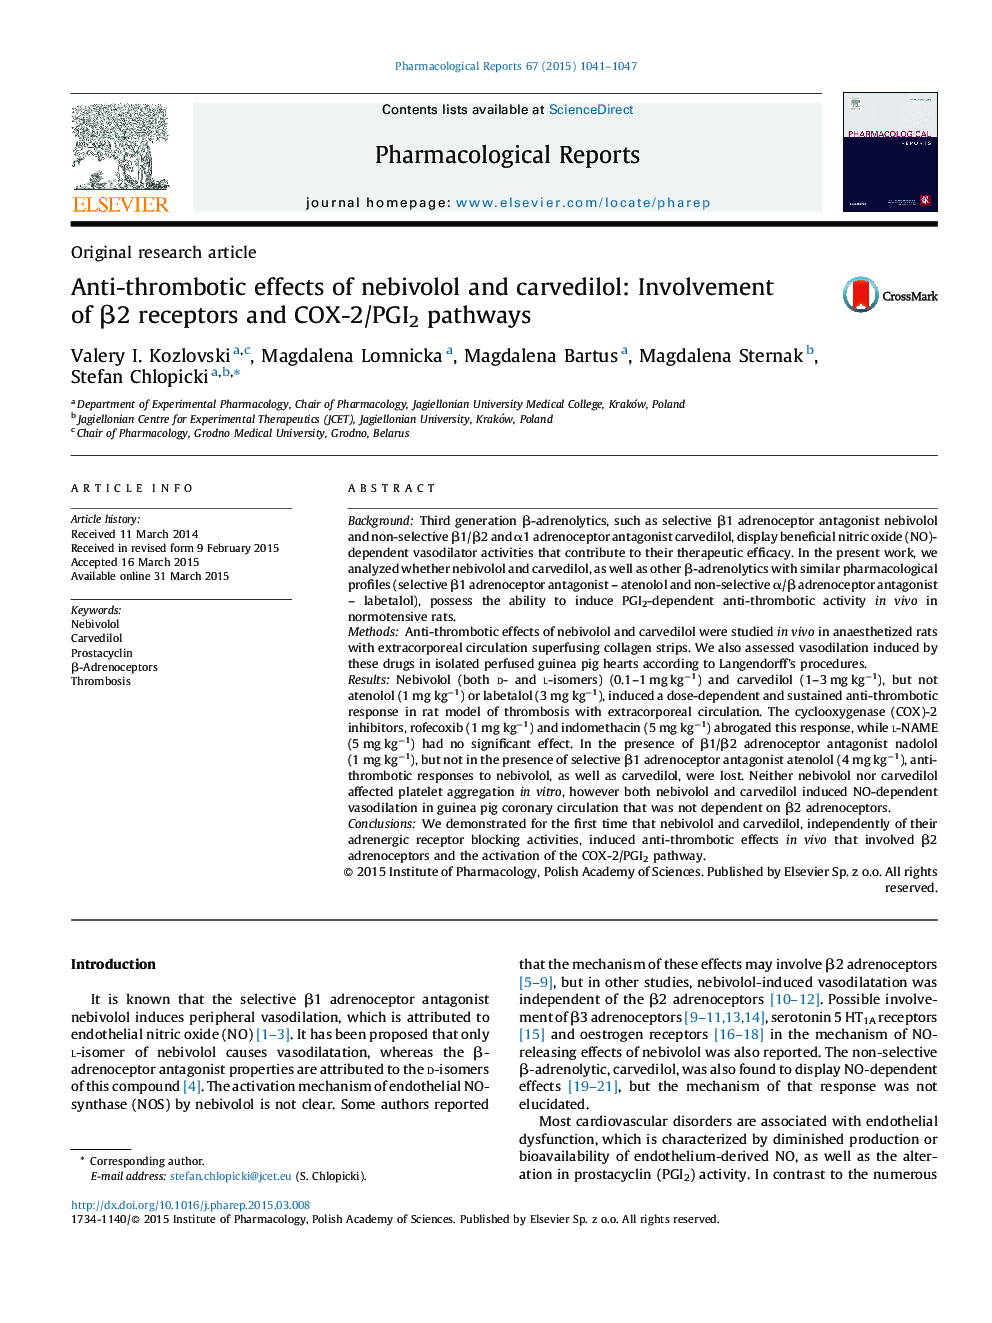 Anti-thrombotic effects of nebivolol and carvedilol: Involvement of β2 receptors and COX-2/PGI2 pathways